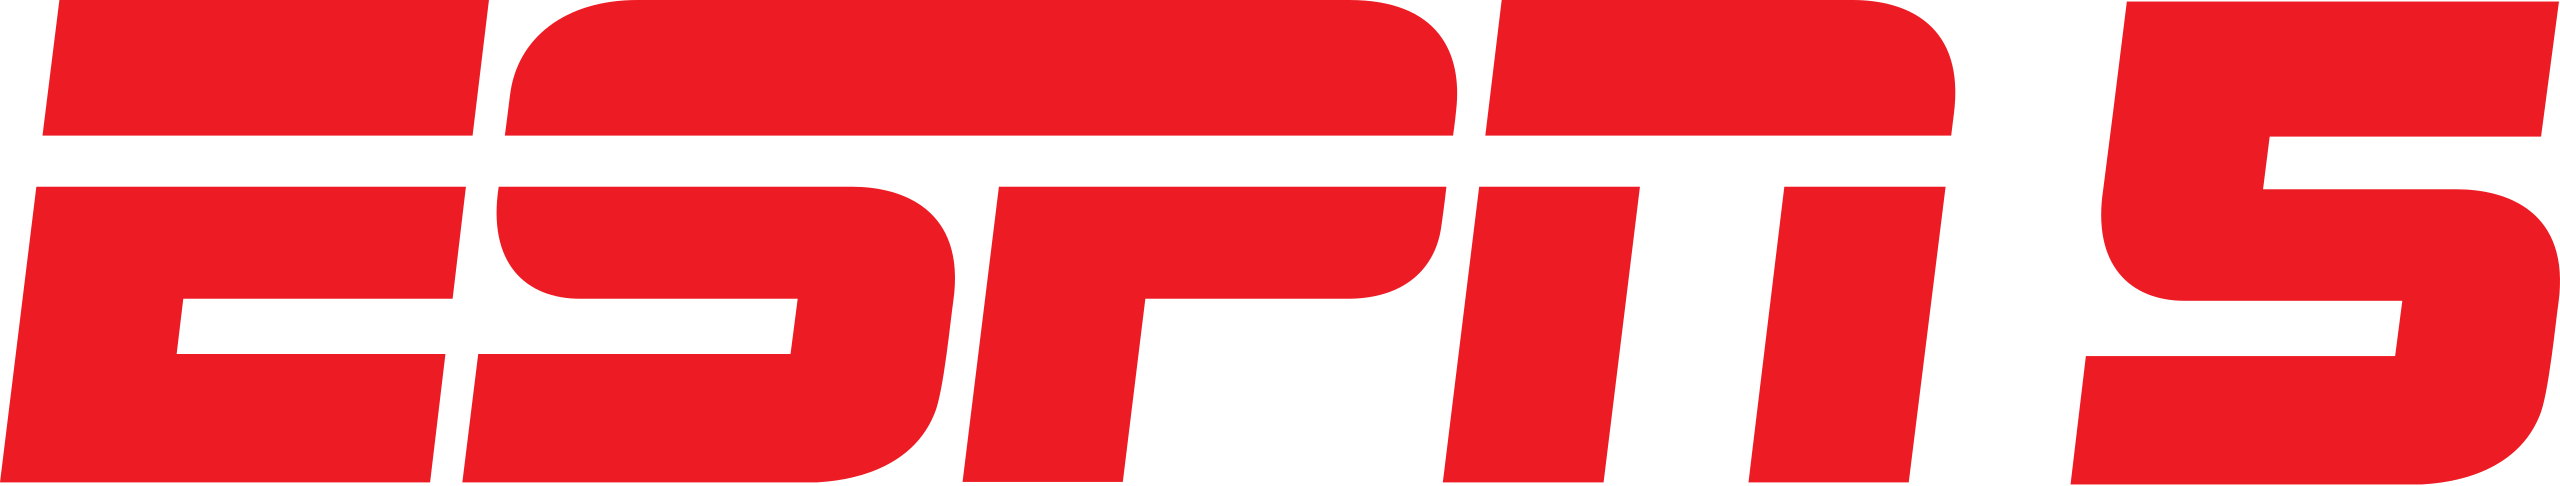 ESPN_5_logo.svg